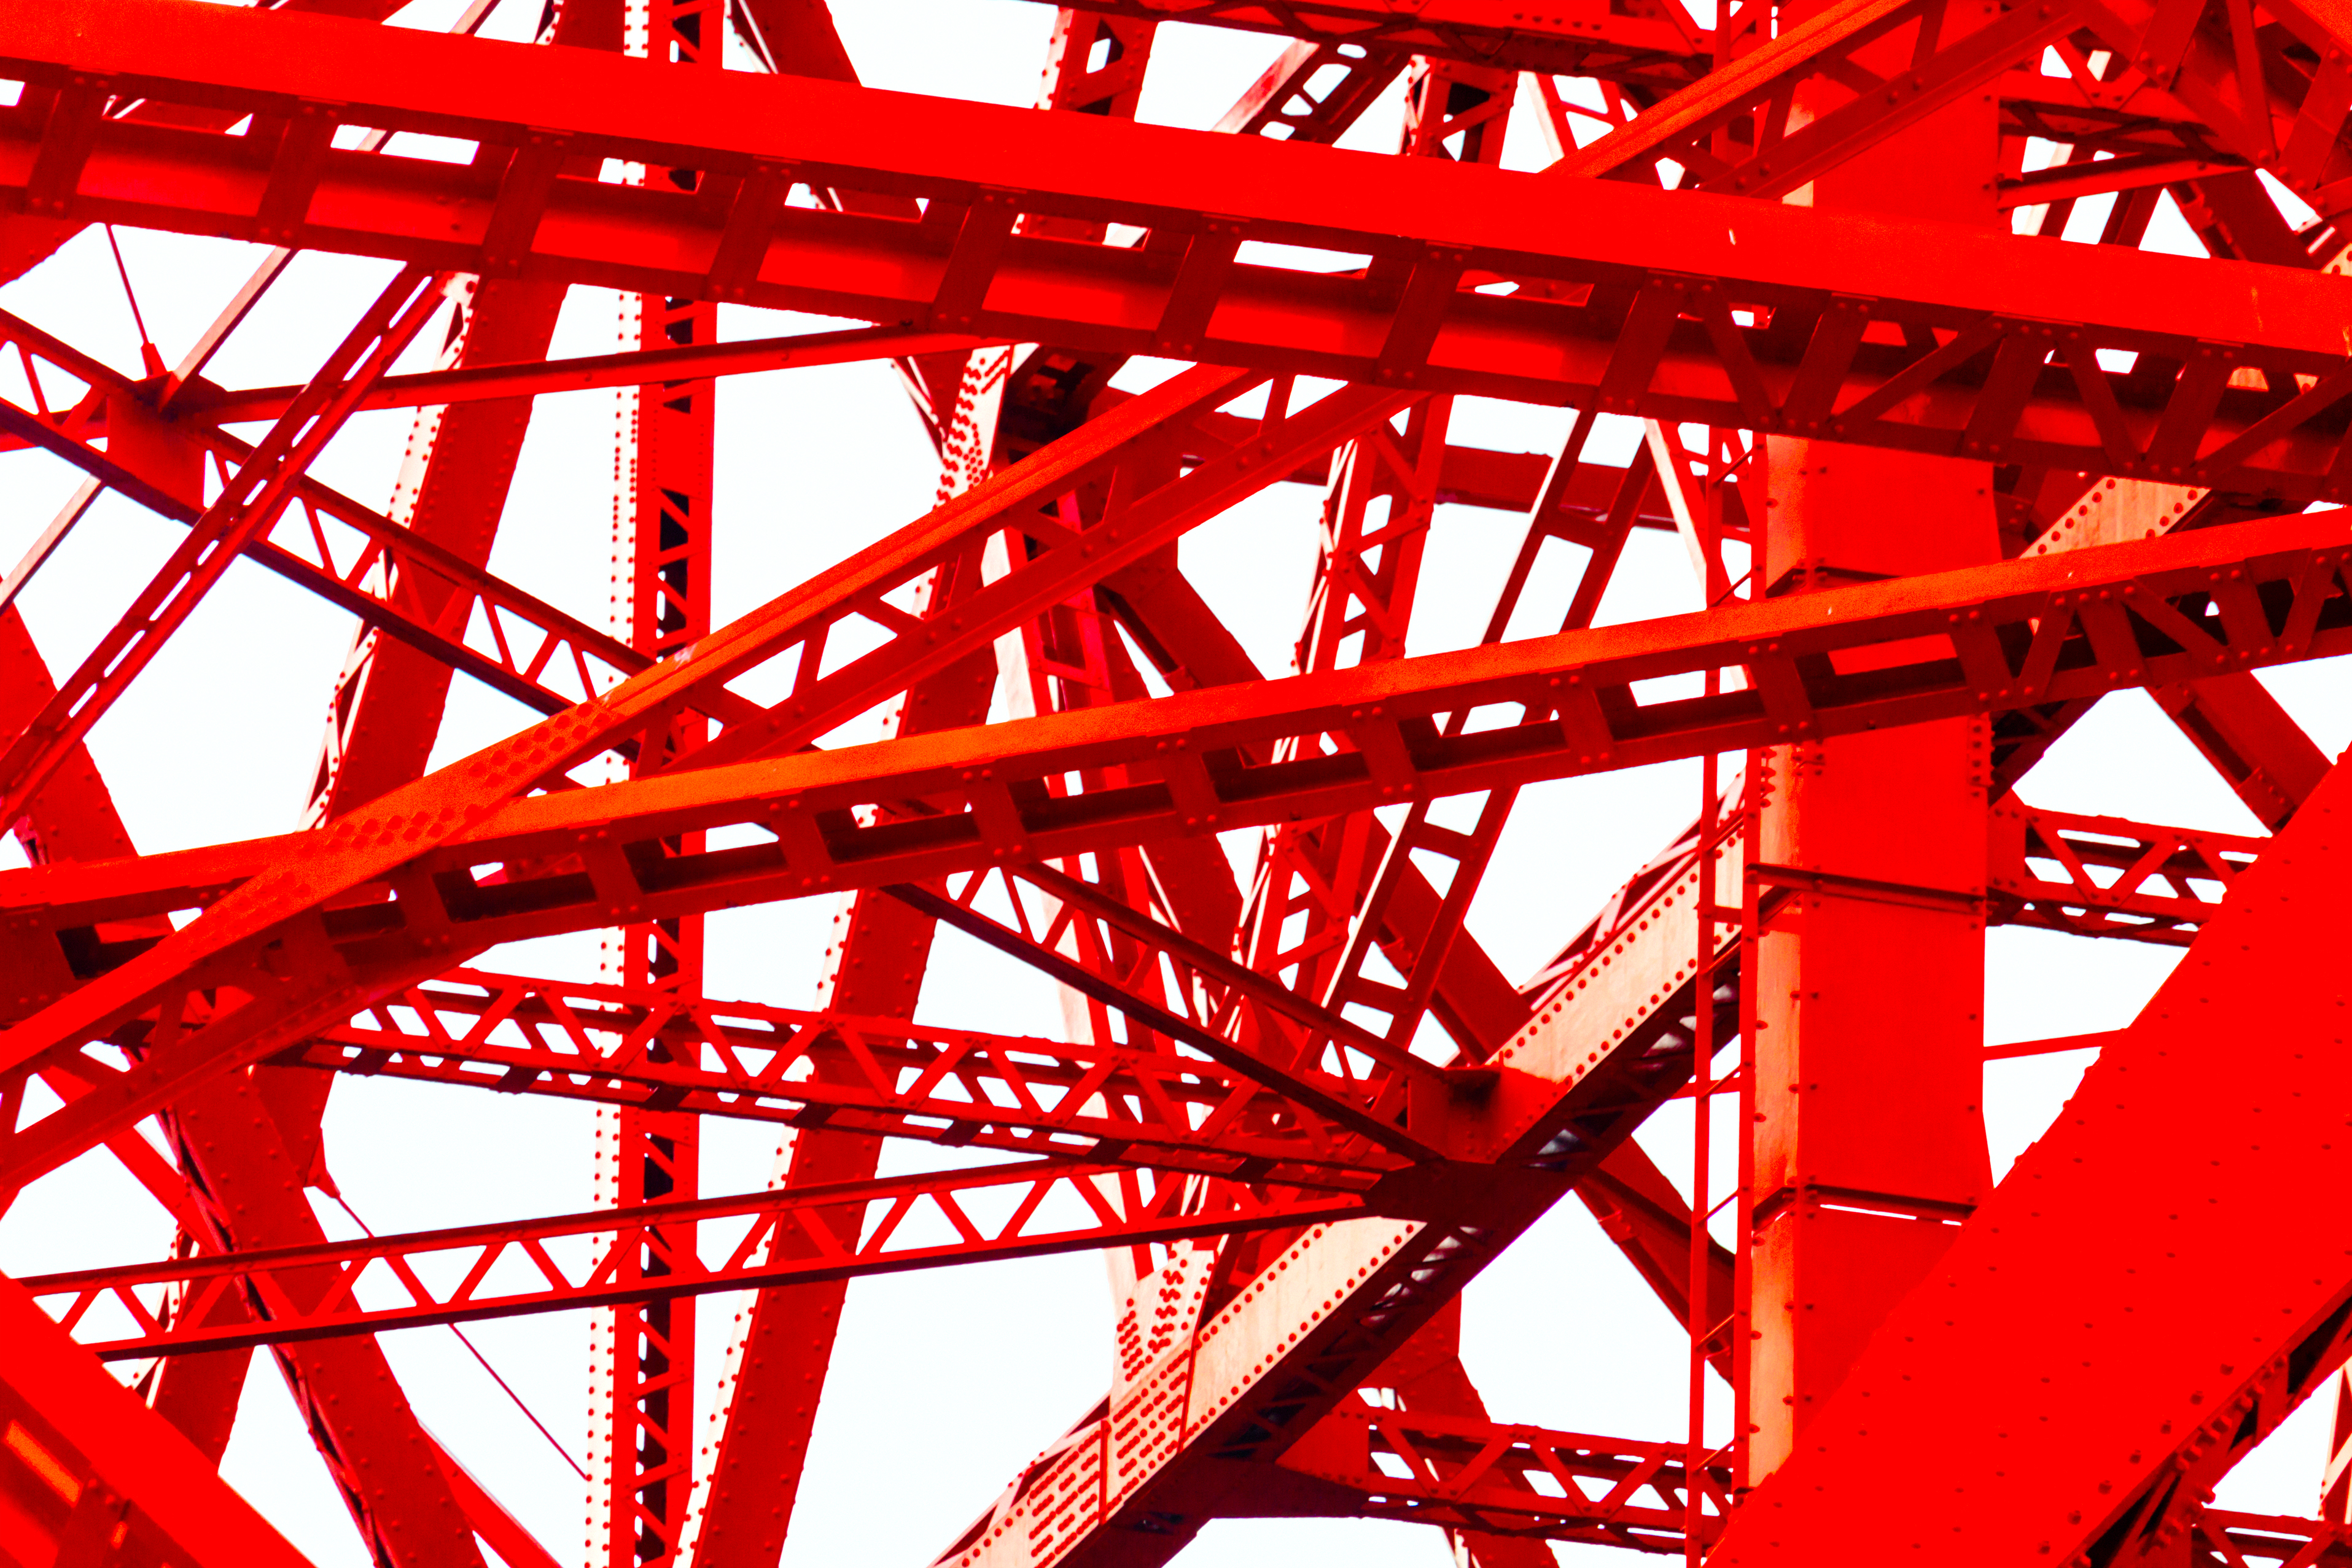 Tokyo Tower Neon Genesis Evangelion Red Steel 3830x2554